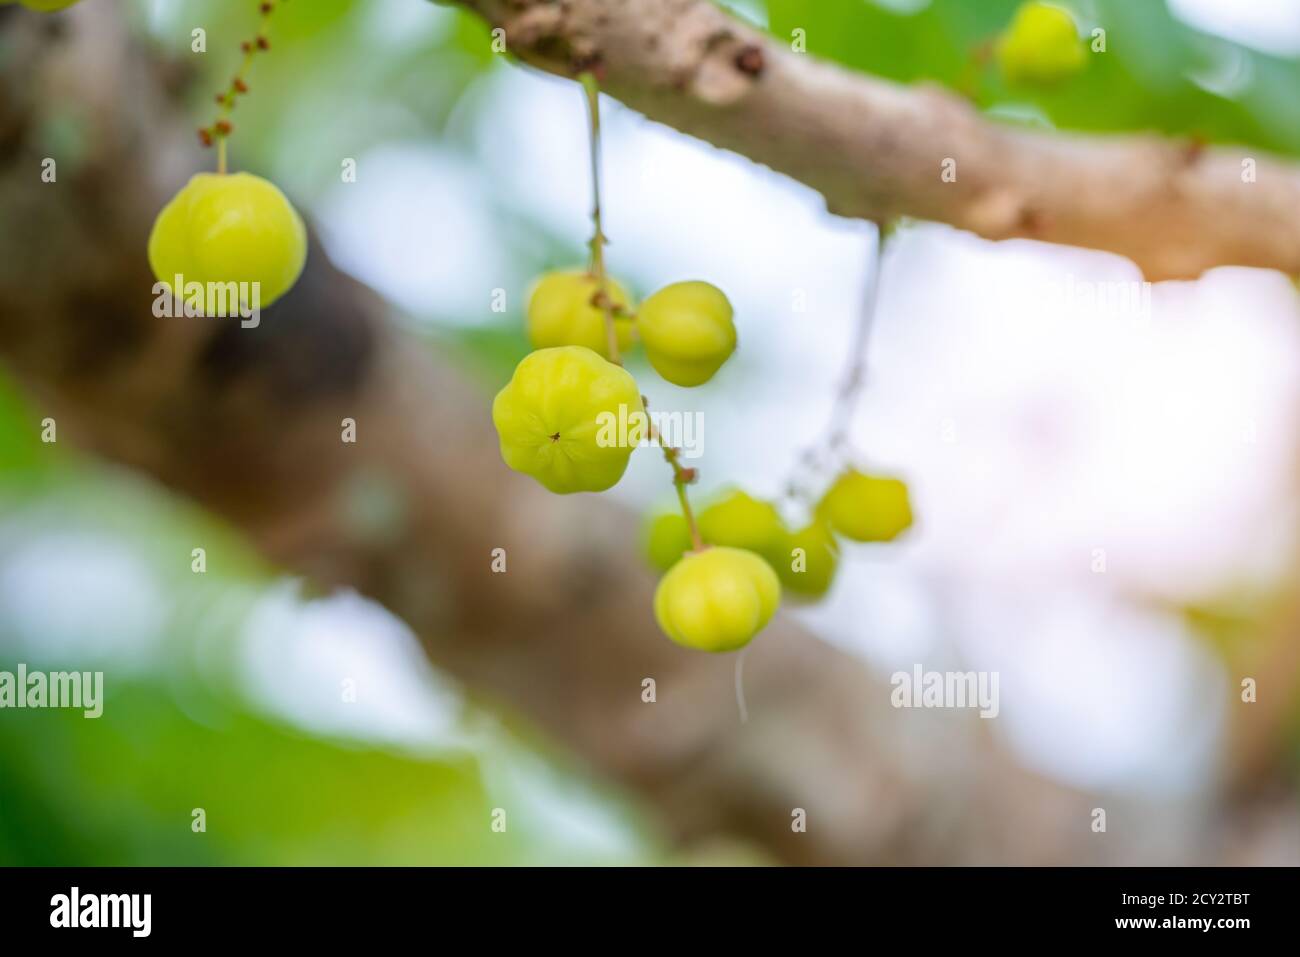 Star gooseberry, Phyllanthus (Phyllanthus acidus), on tree blurred bokeh background, Macro Stock Photo